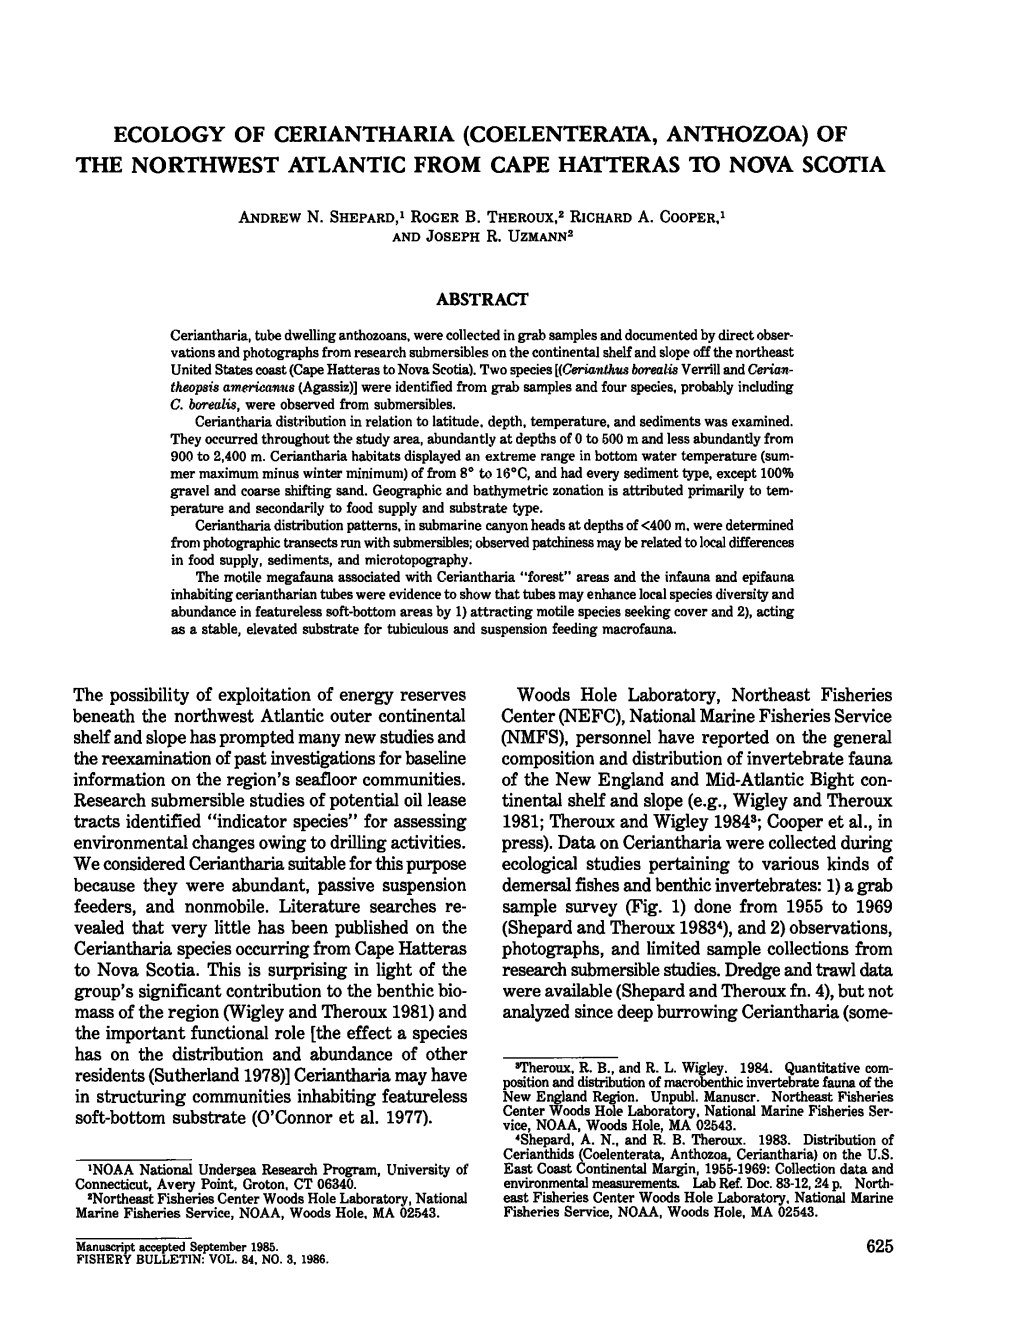 ECOLOGY of CERIANTHARIA (COELENTERATA, ANTHOZOA) of the NORTHWEST ATLANTIC from CAPE HATTERAS M NOVA SCOTIA